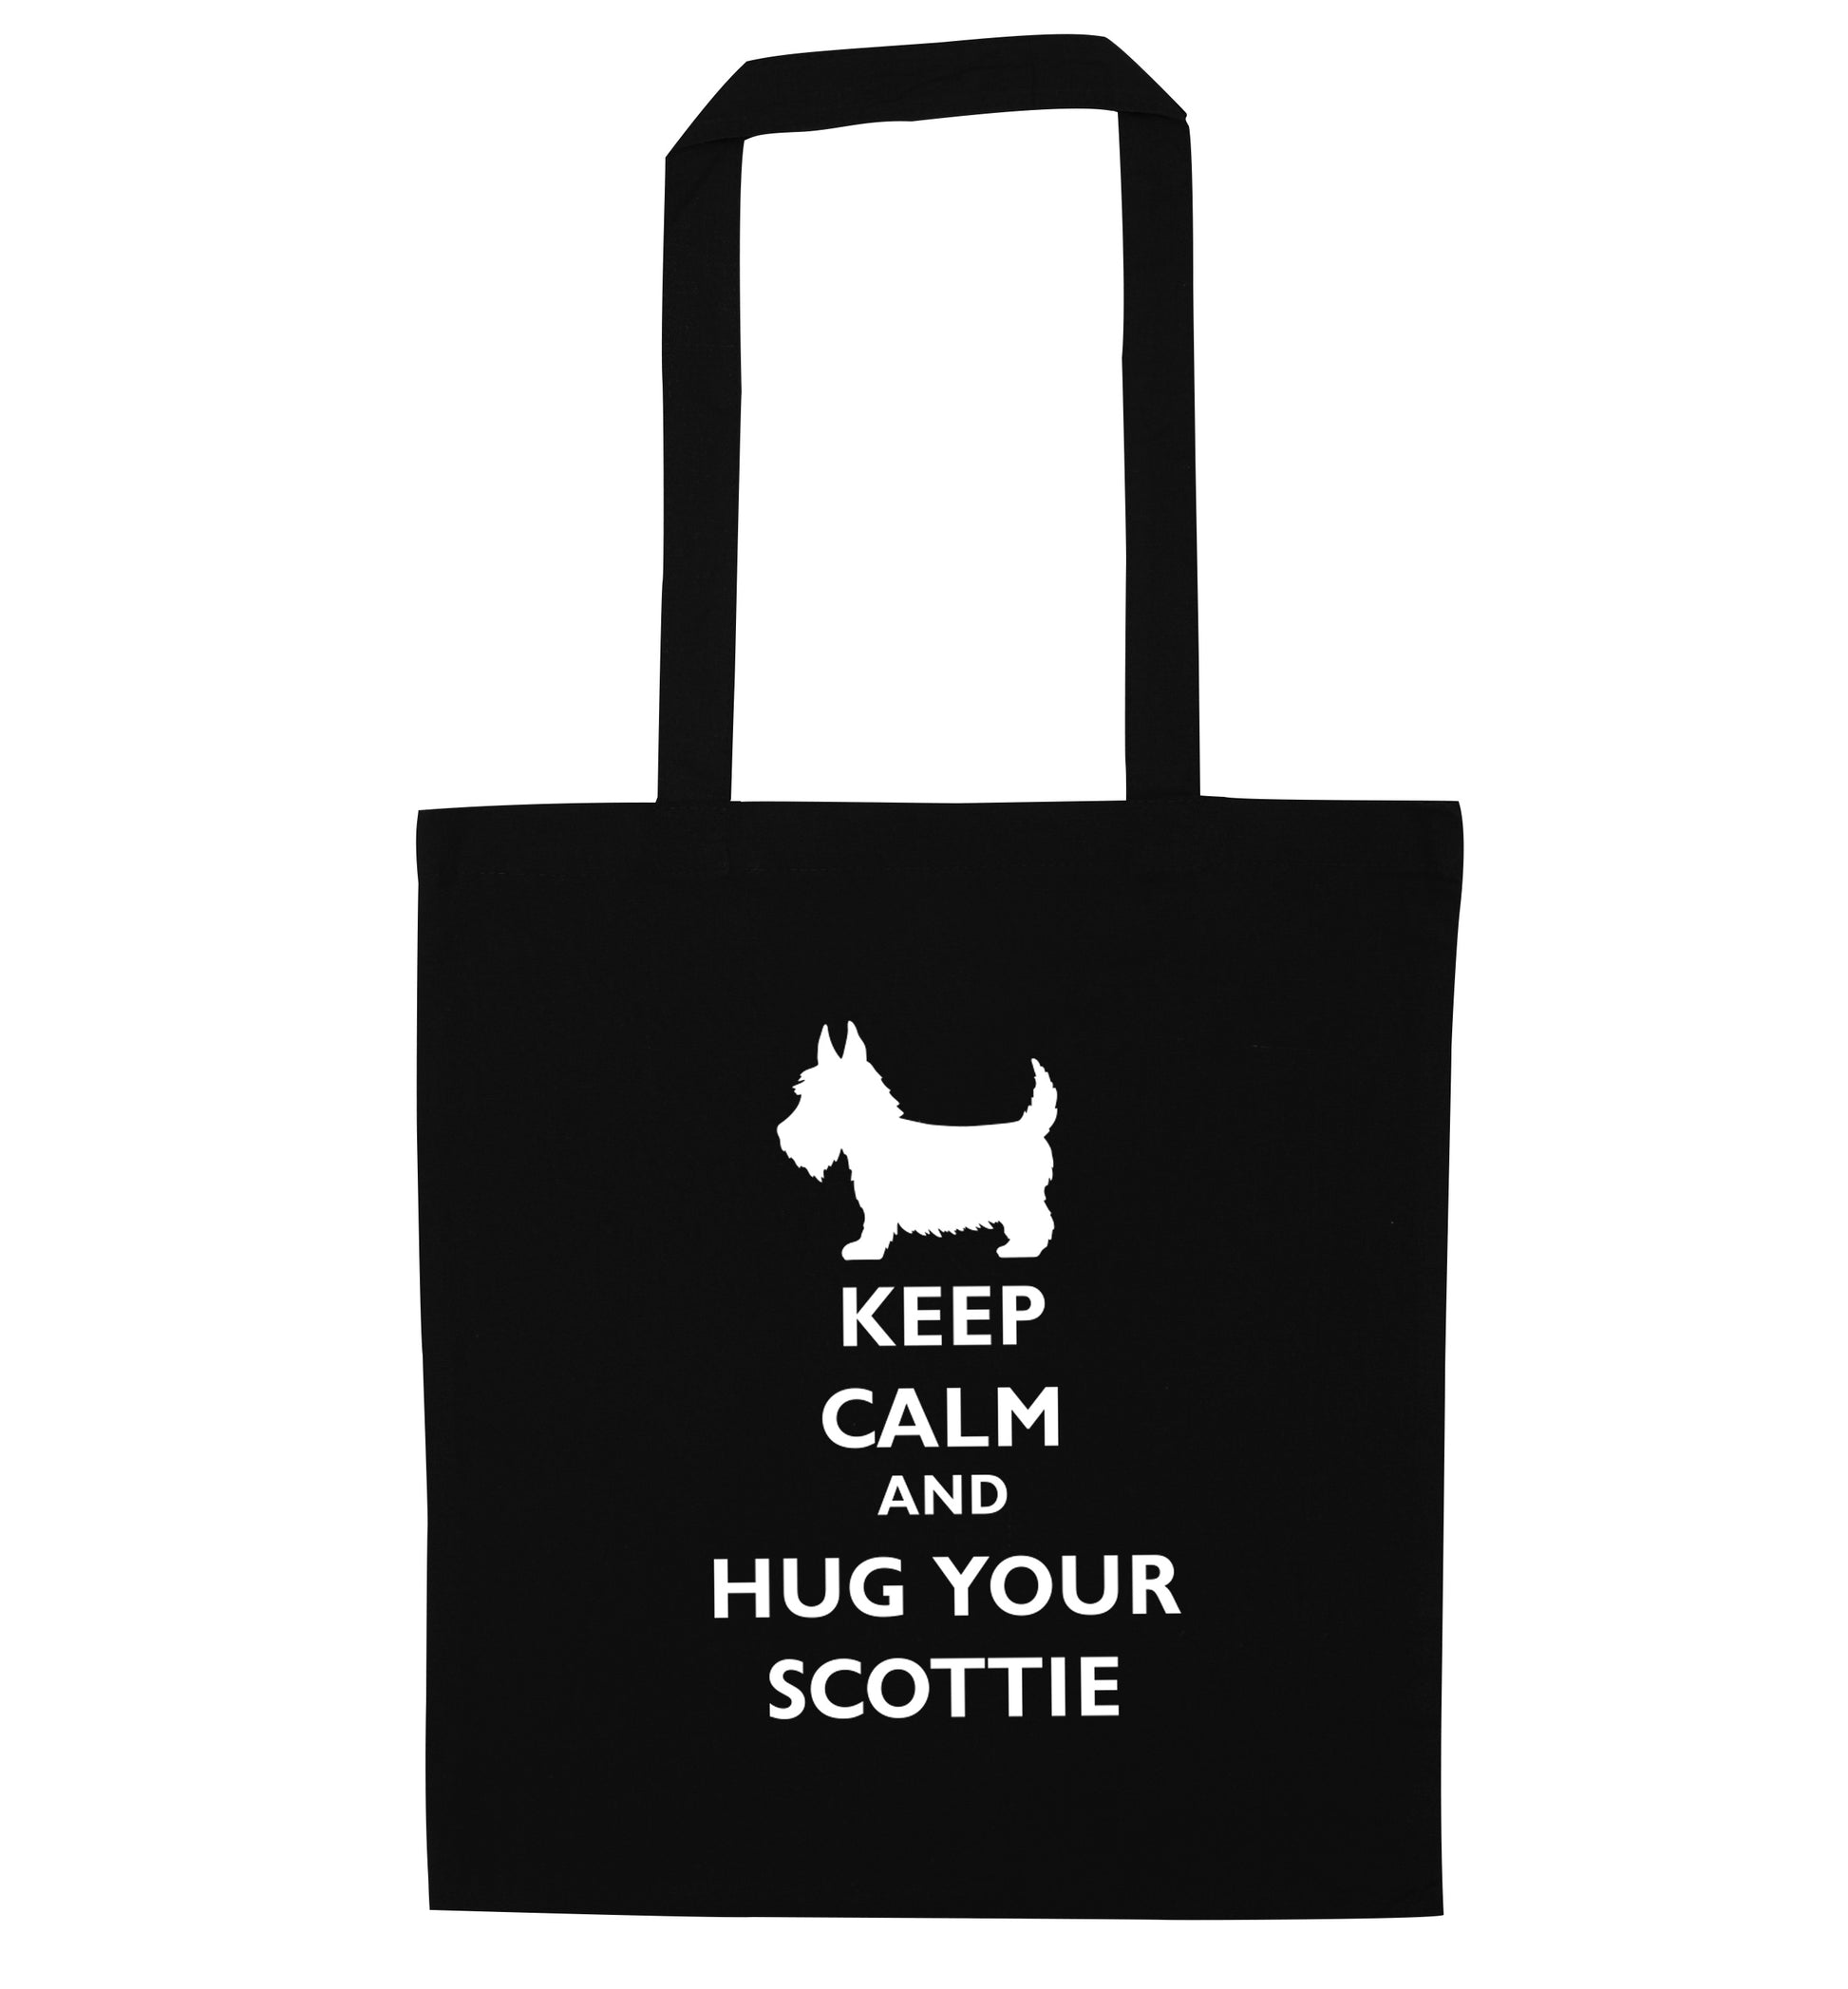 Keep calm and hug your scottie black tote bag